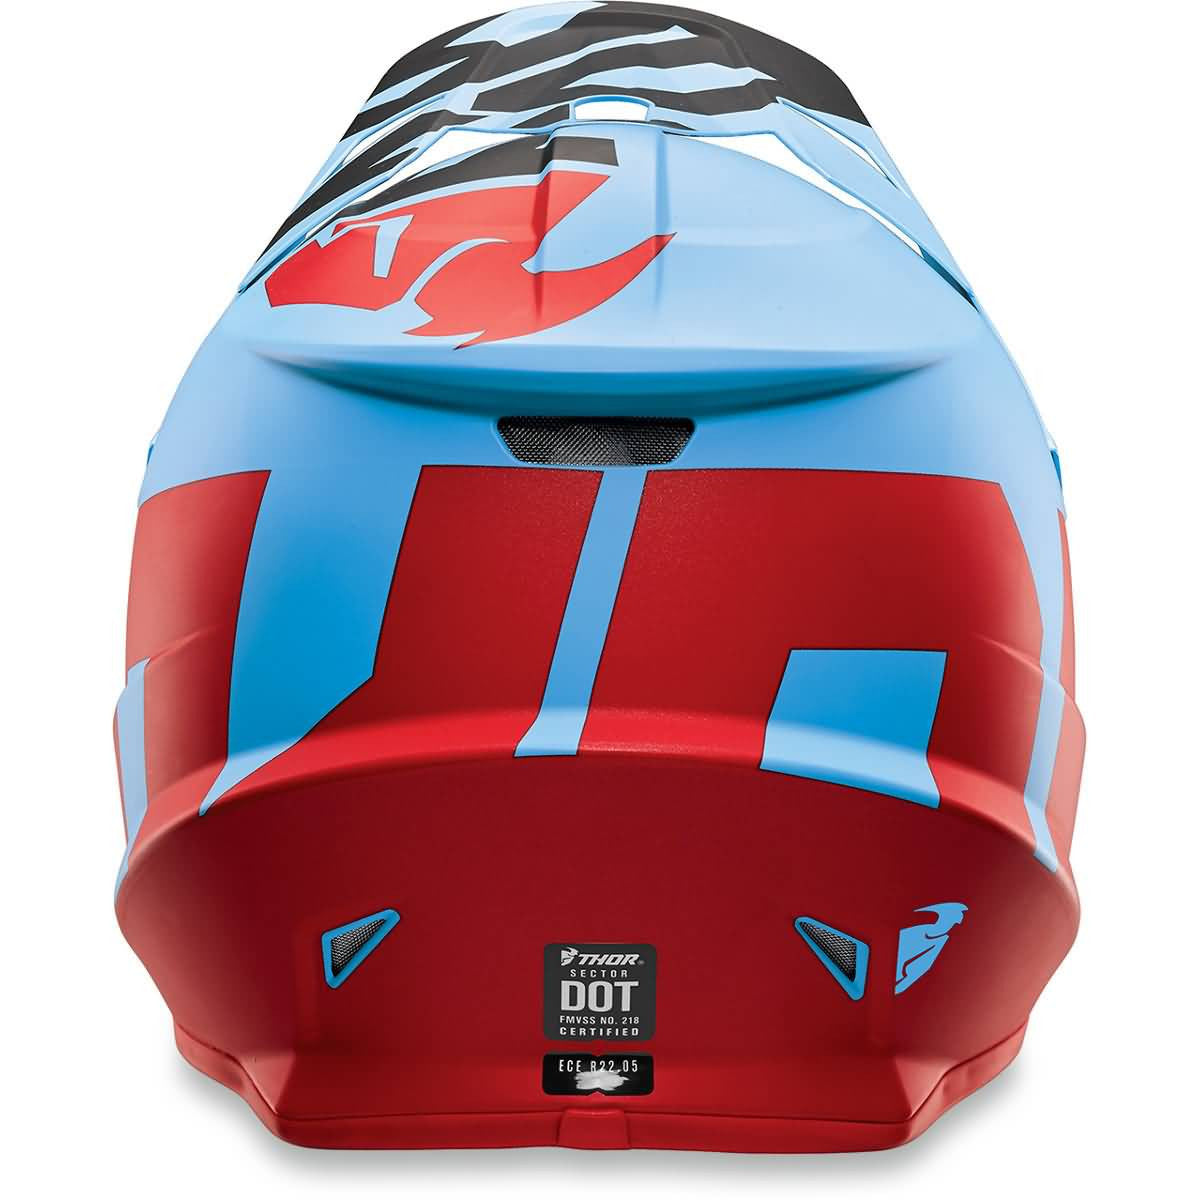 Thor MX 2017 | All New Sector Motocross Helmets